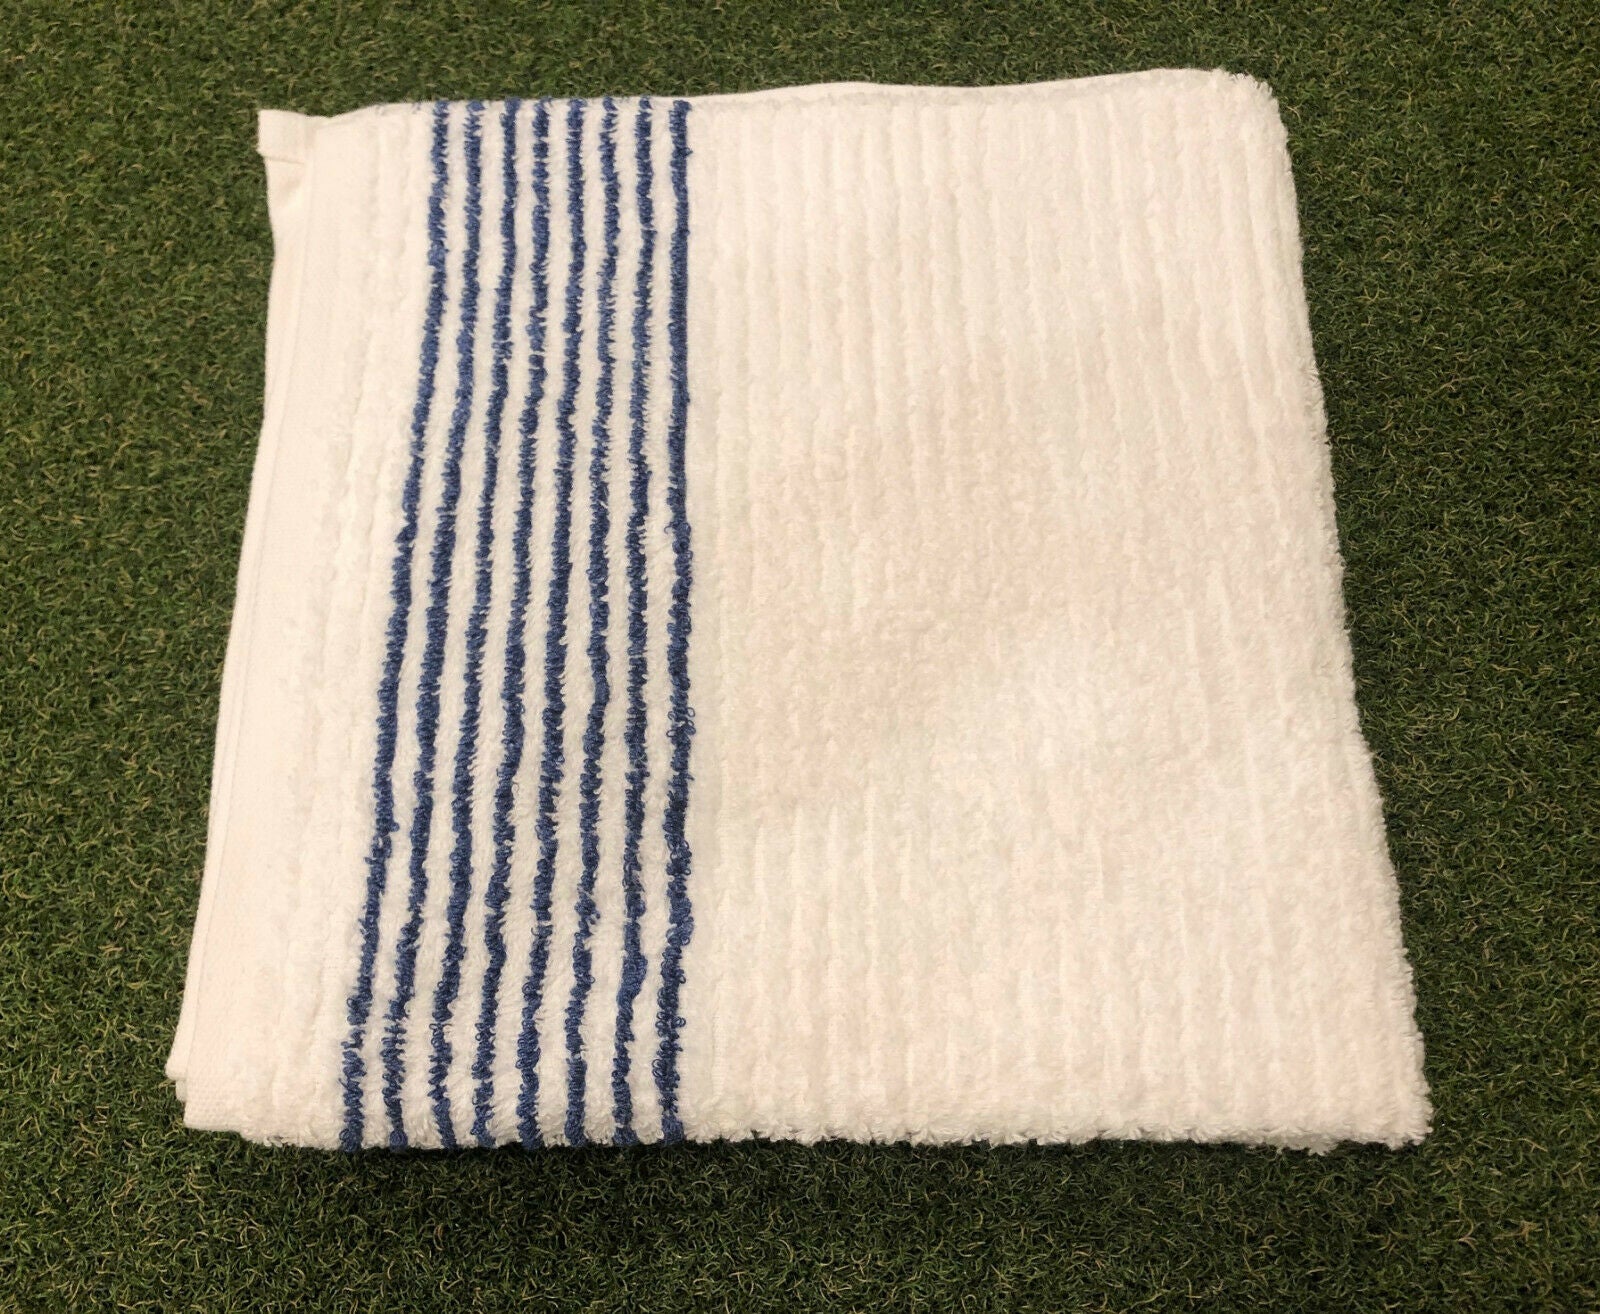 Large 22" x 44" Golf Tour Caddy Towel - White w/ Blue, Black, Red, Green Stripe - The Golf Club Trader